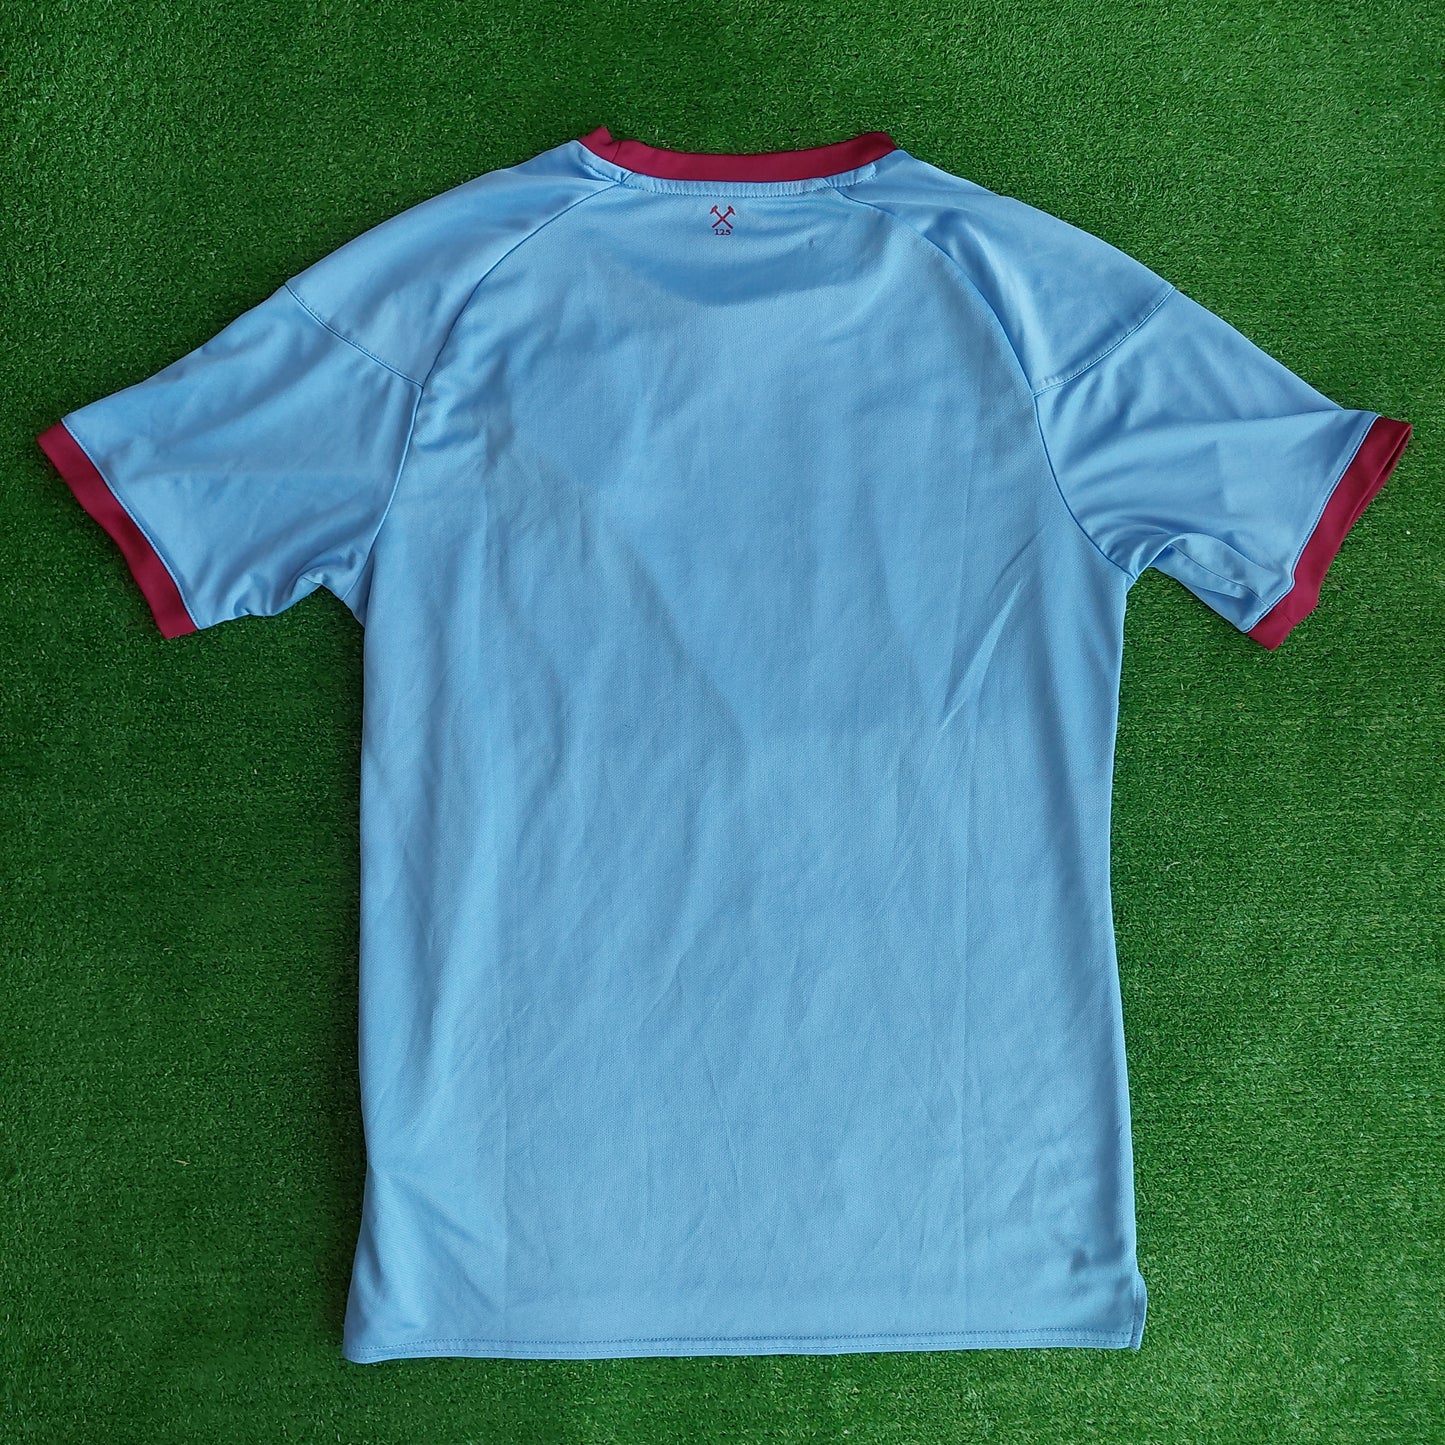 West Ham United 2020/21 Away Shirt (Very Good) - Size L